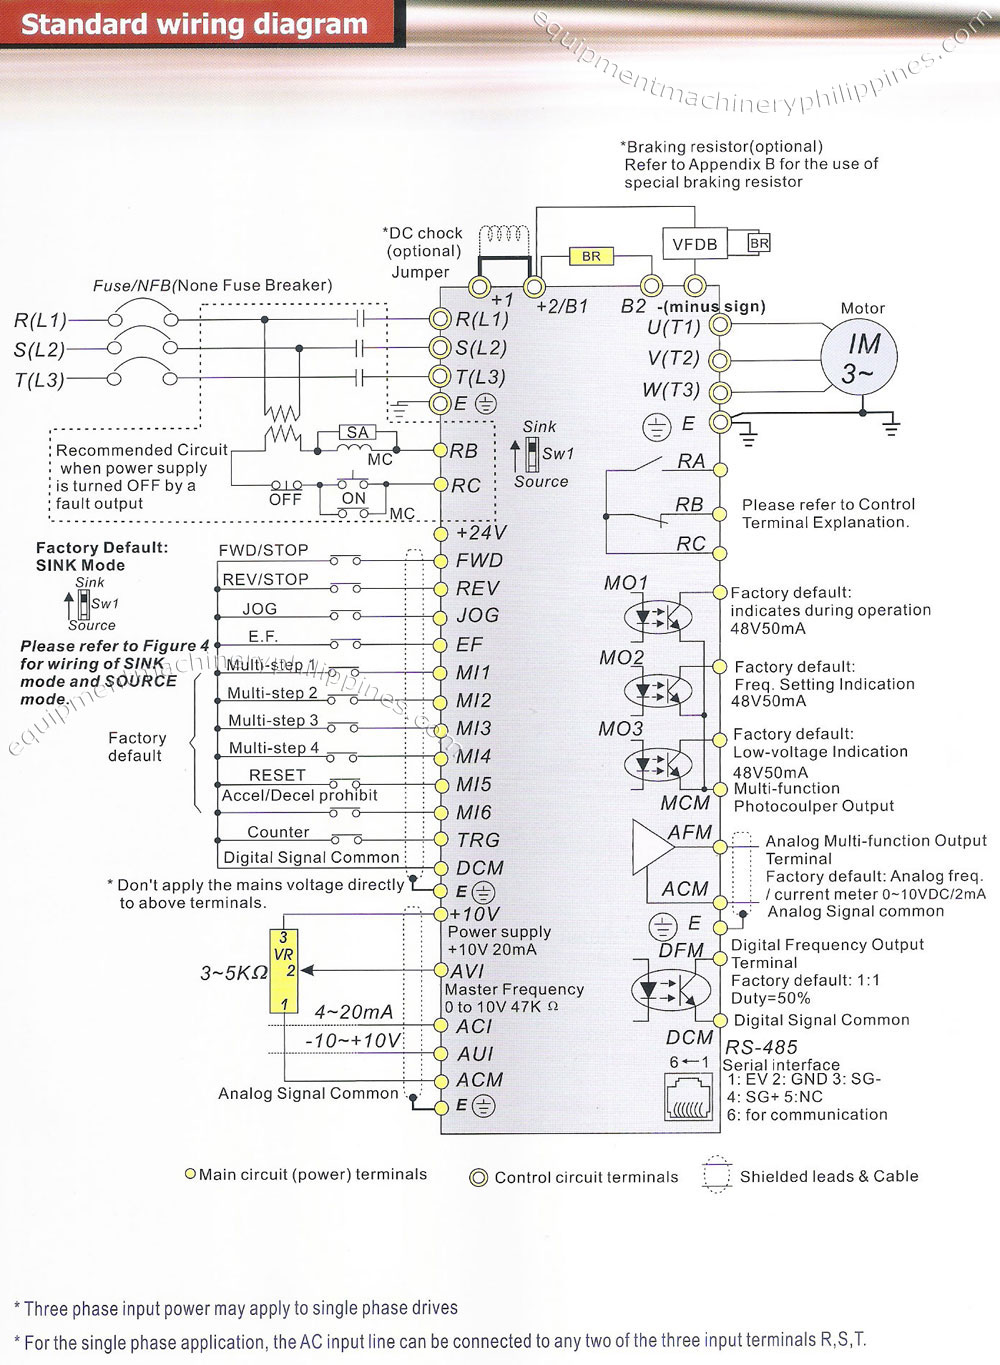 Delta VFD B Series Standard Wiring Diagram